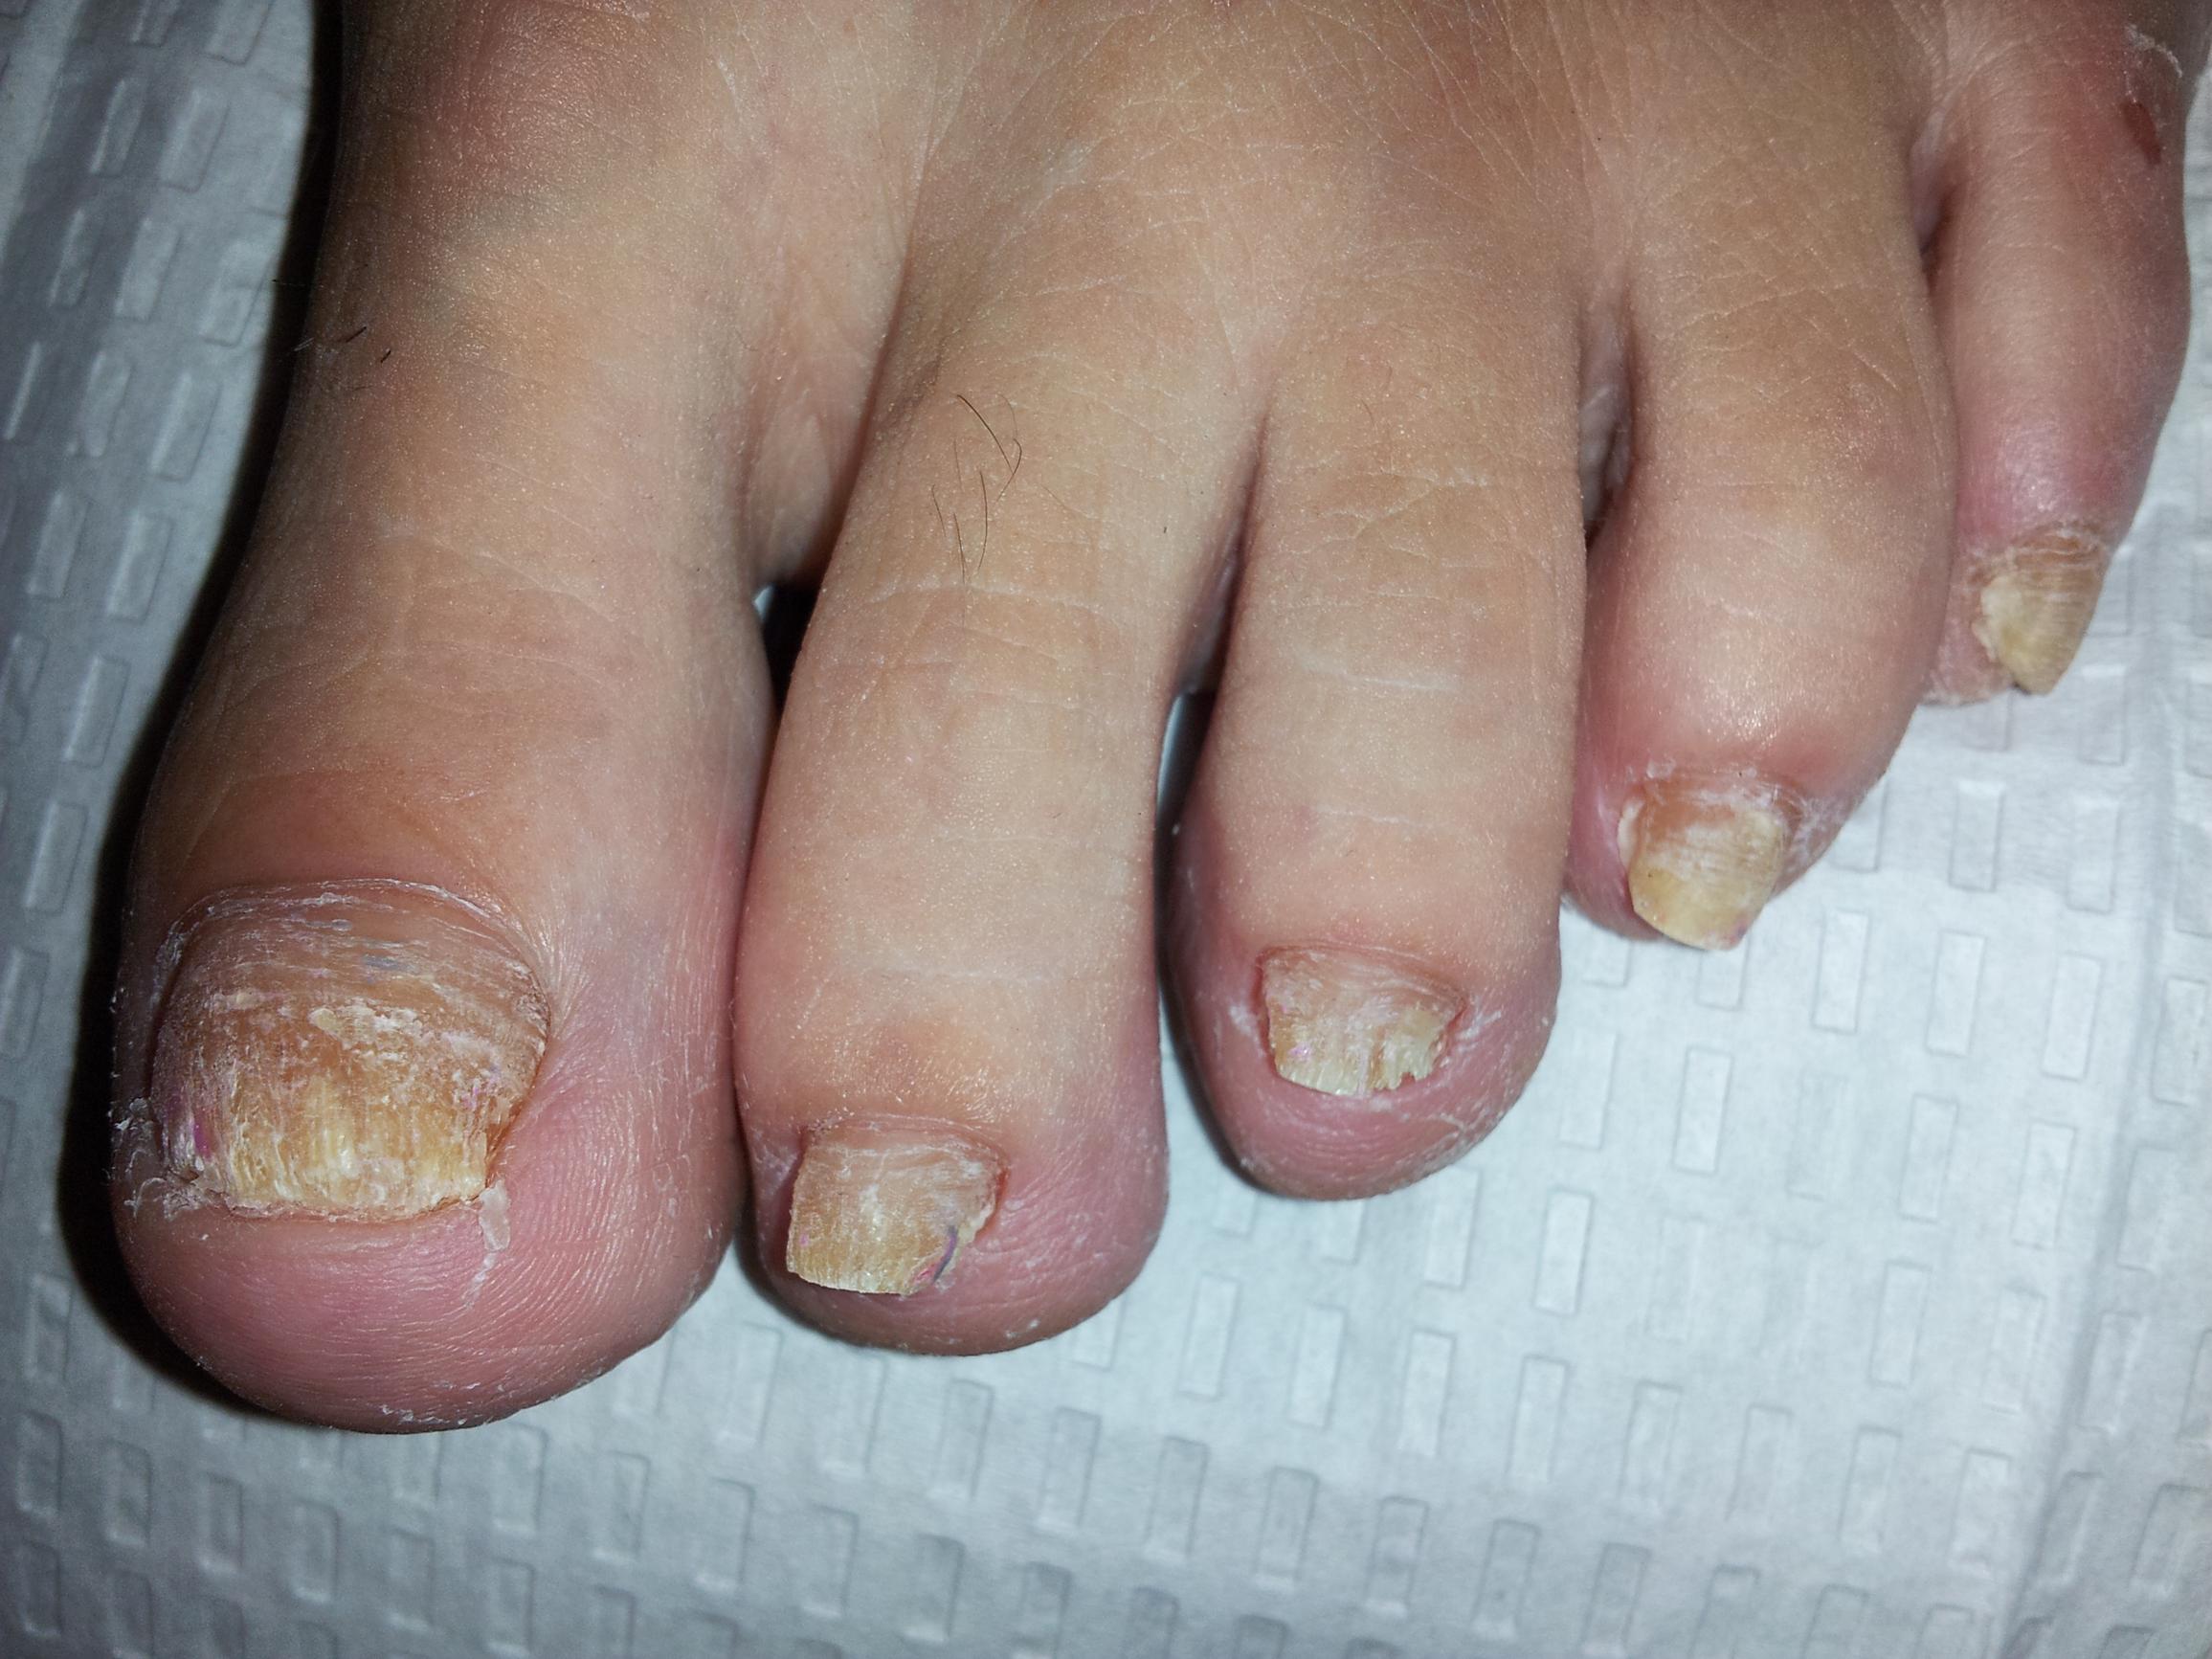 Nail Disease Treatment - Total Skin Pro Clinic